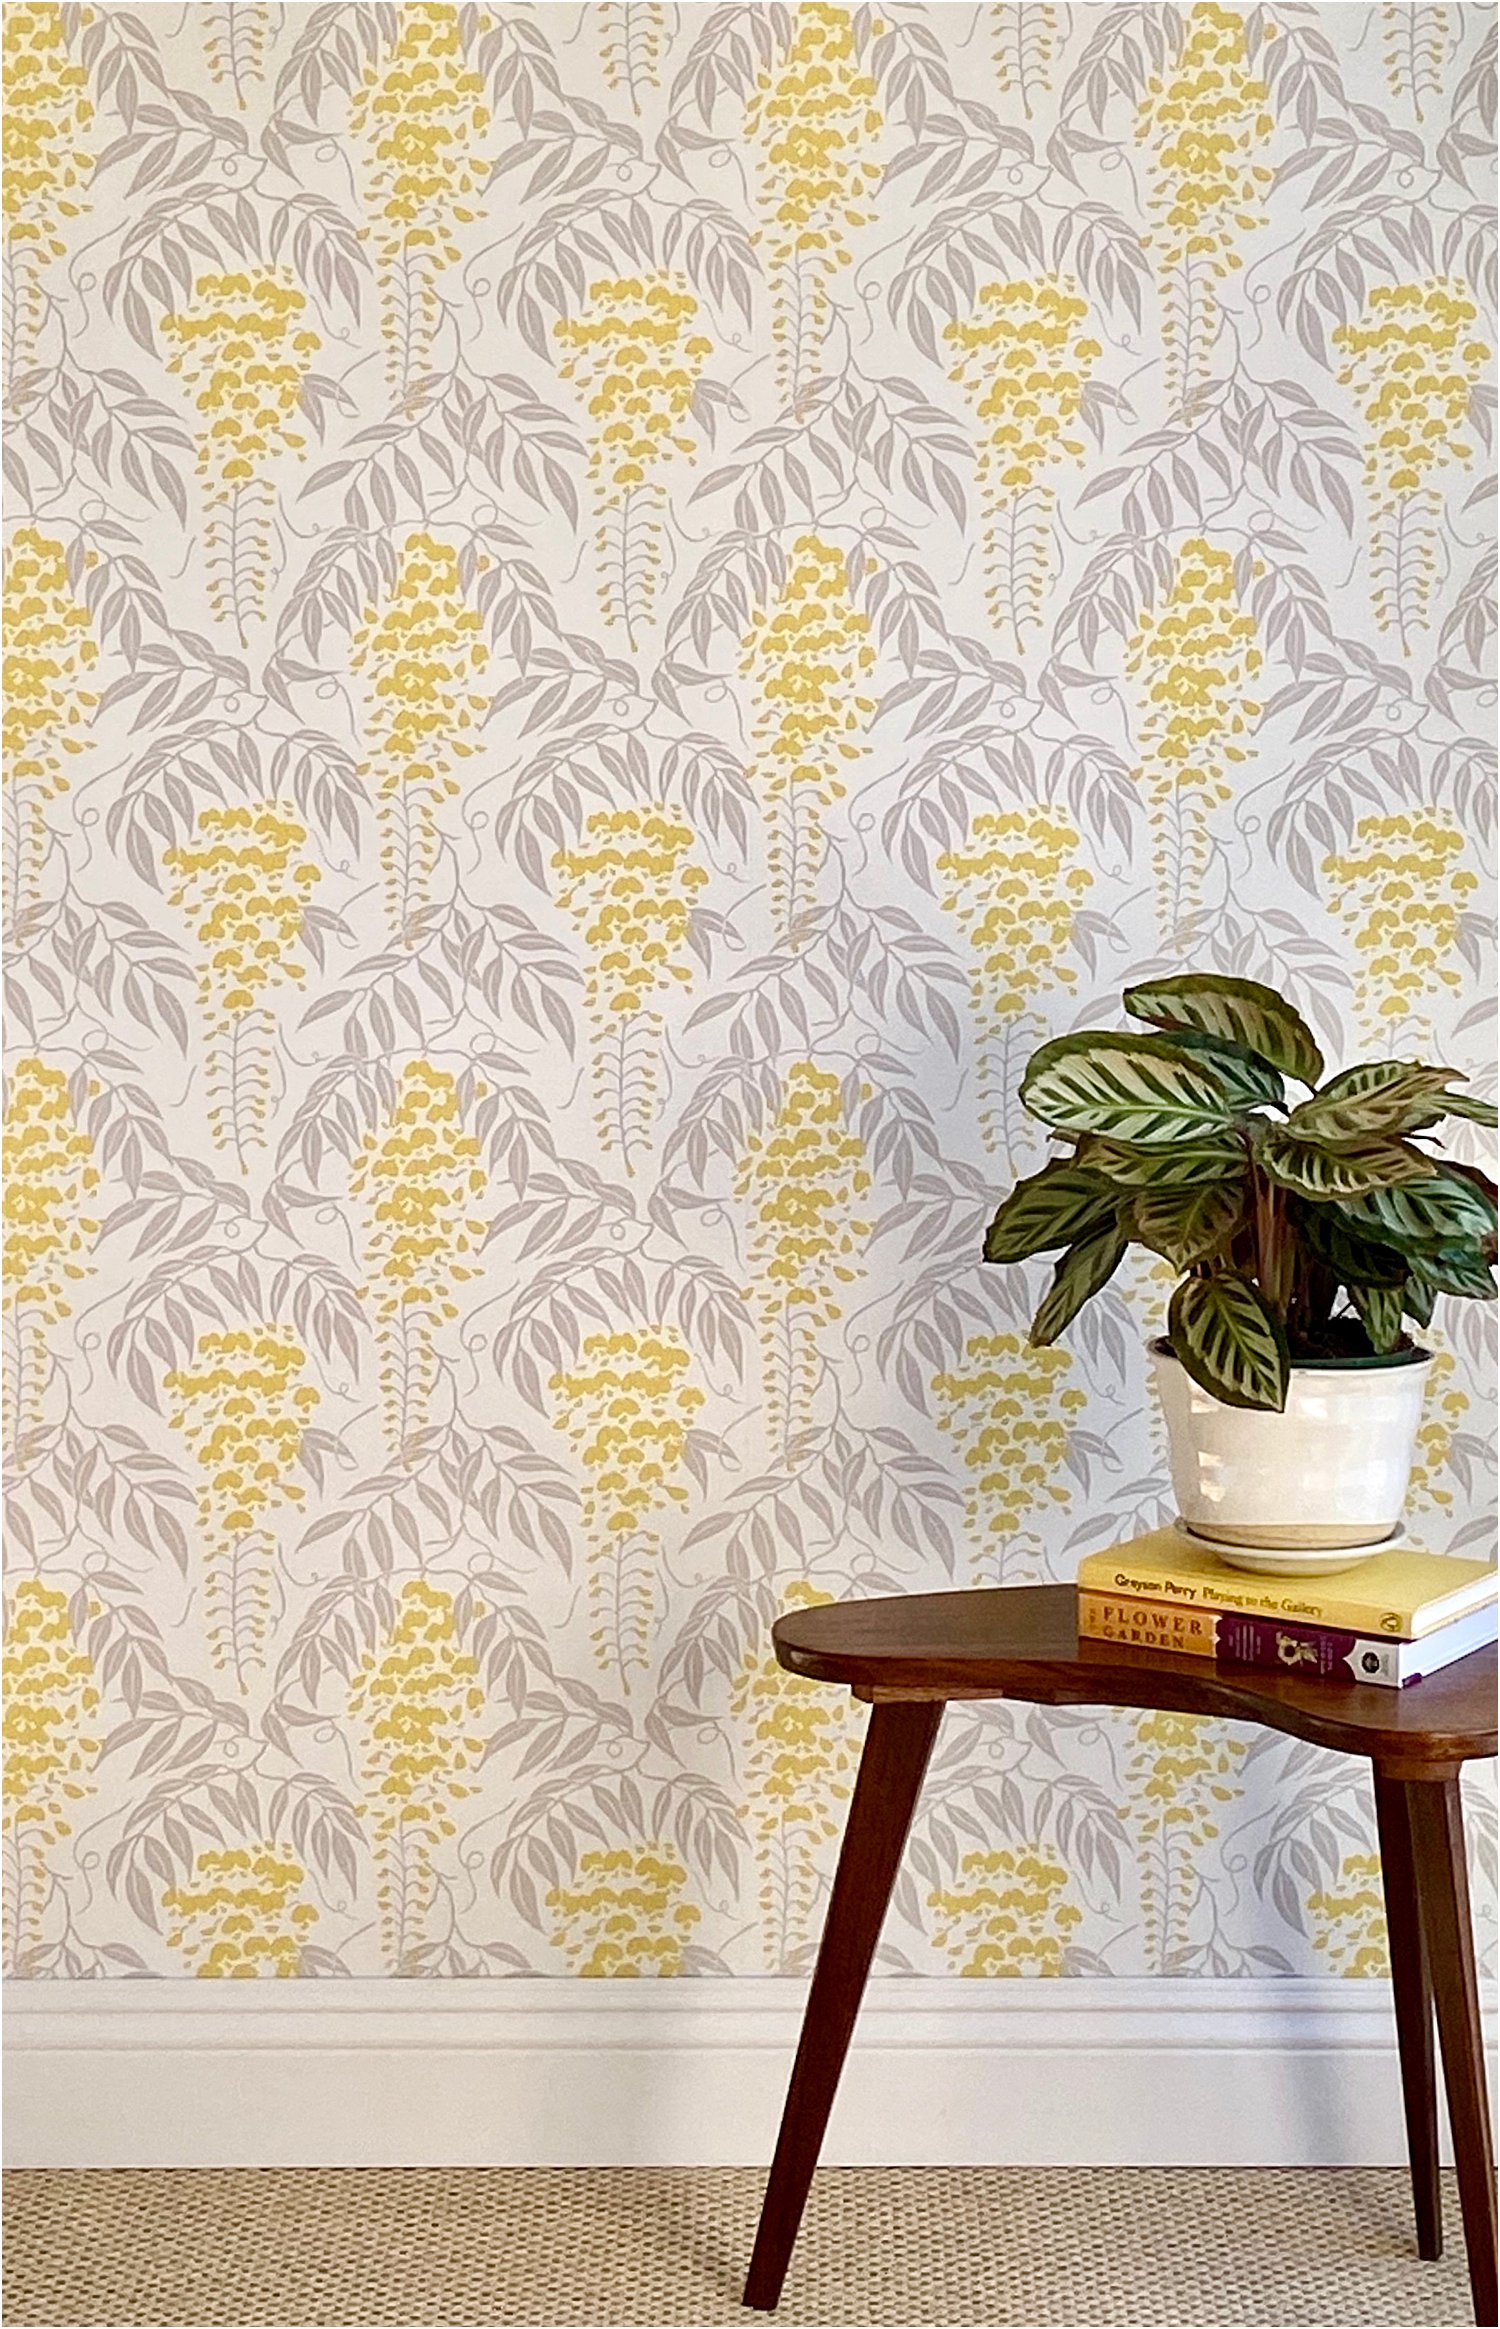 wallpaper-hanging-tips-British-designer-Fiona-Howard-spring-refresh-interior-design